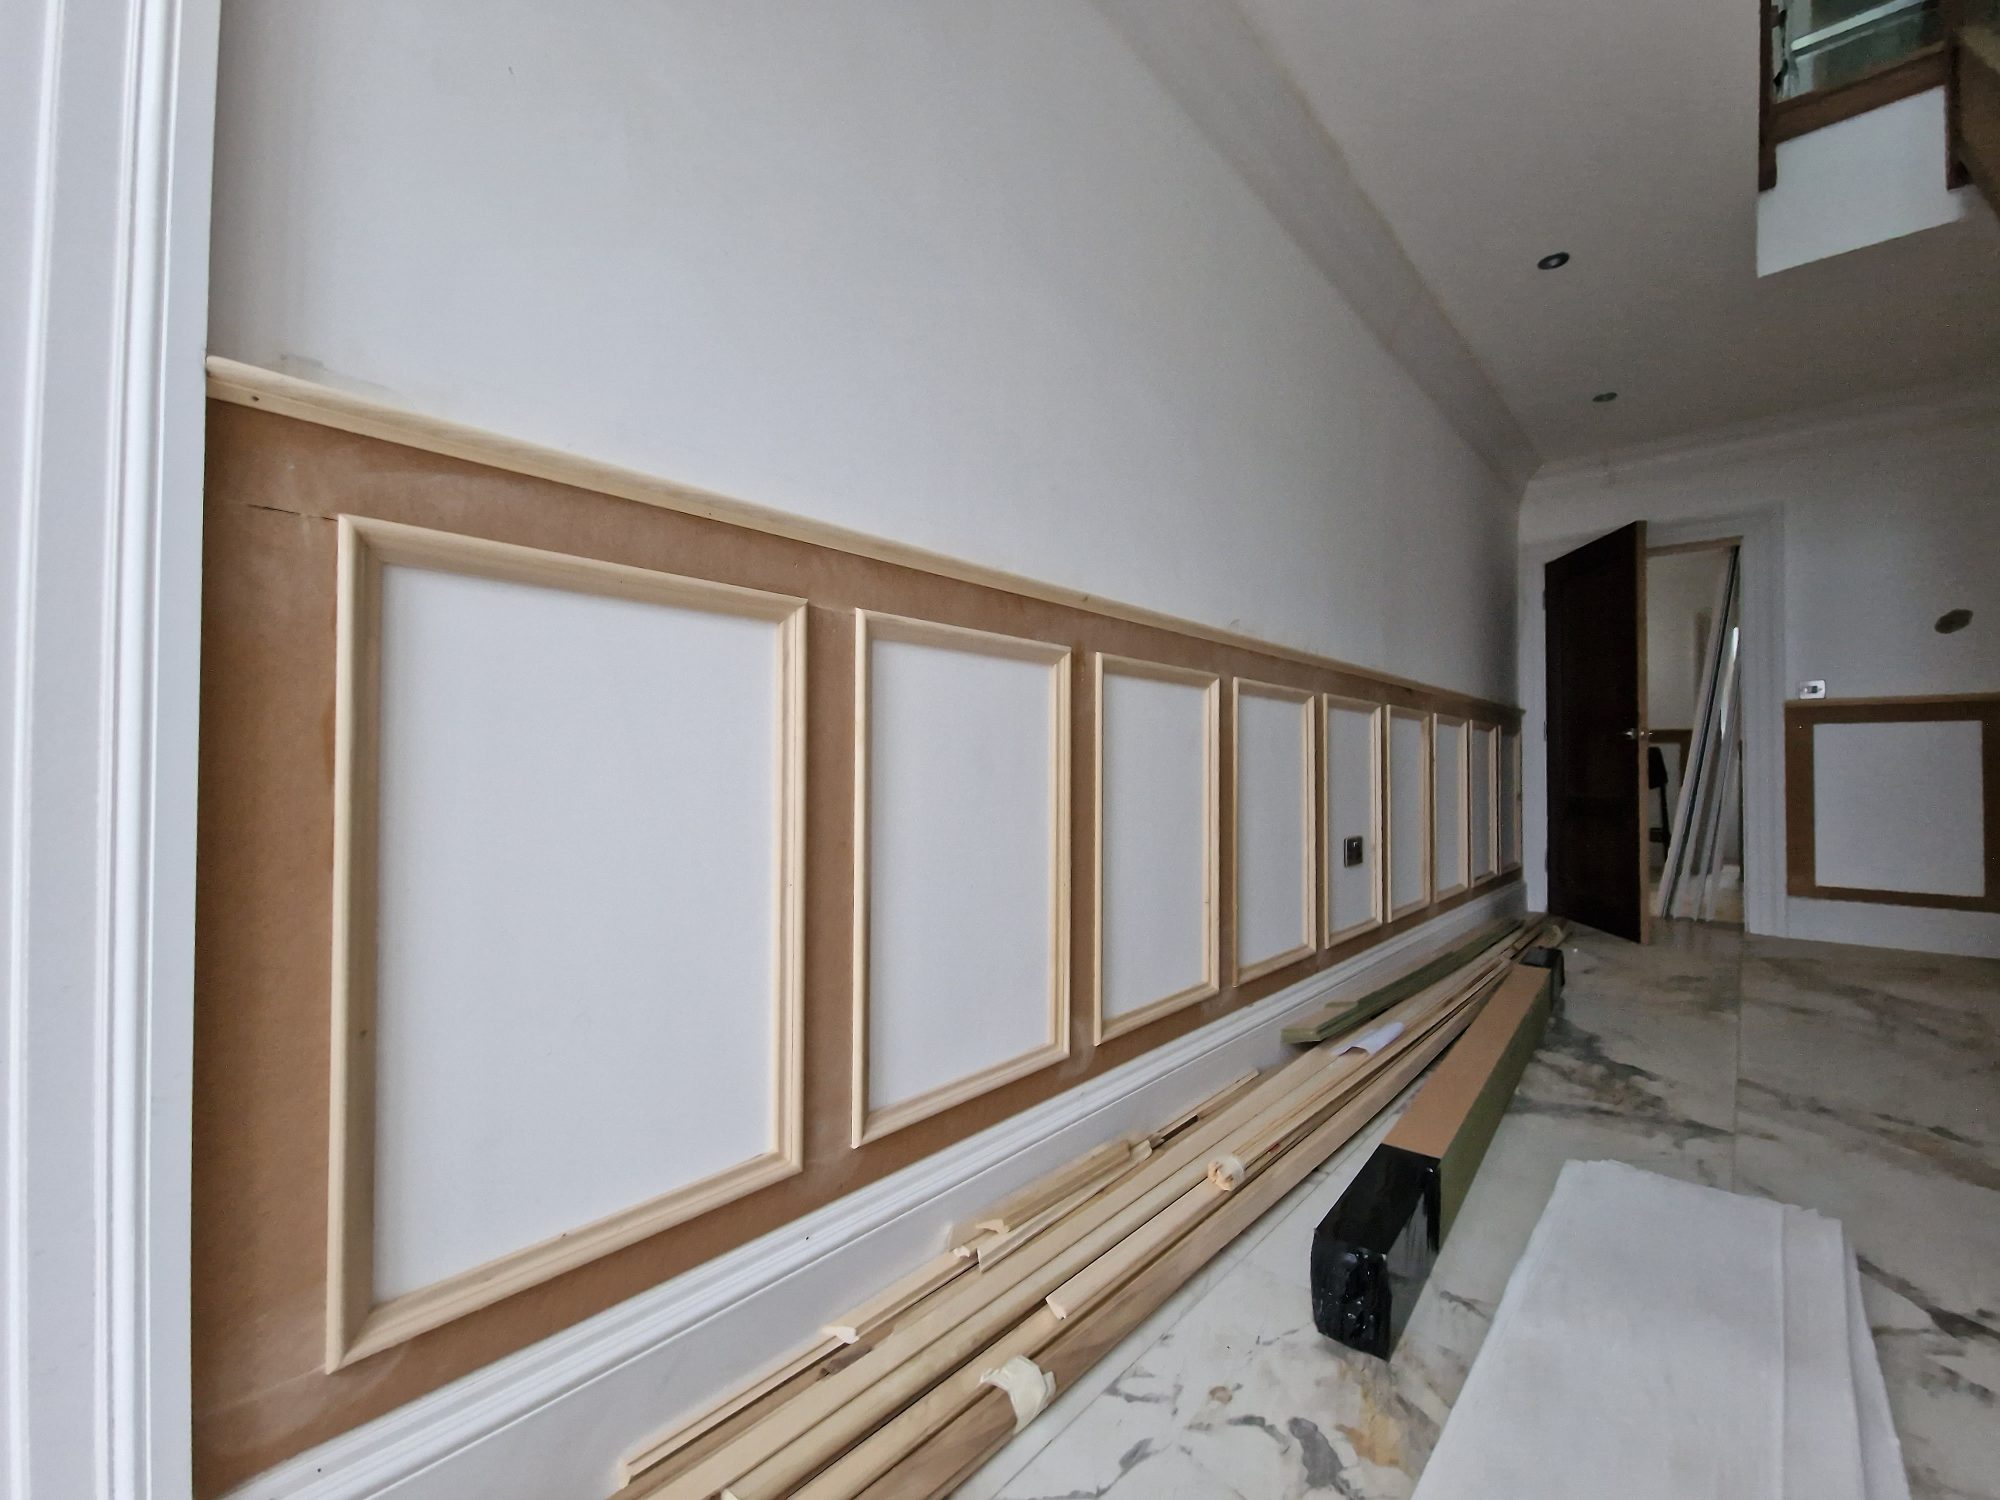 Wall Paneling